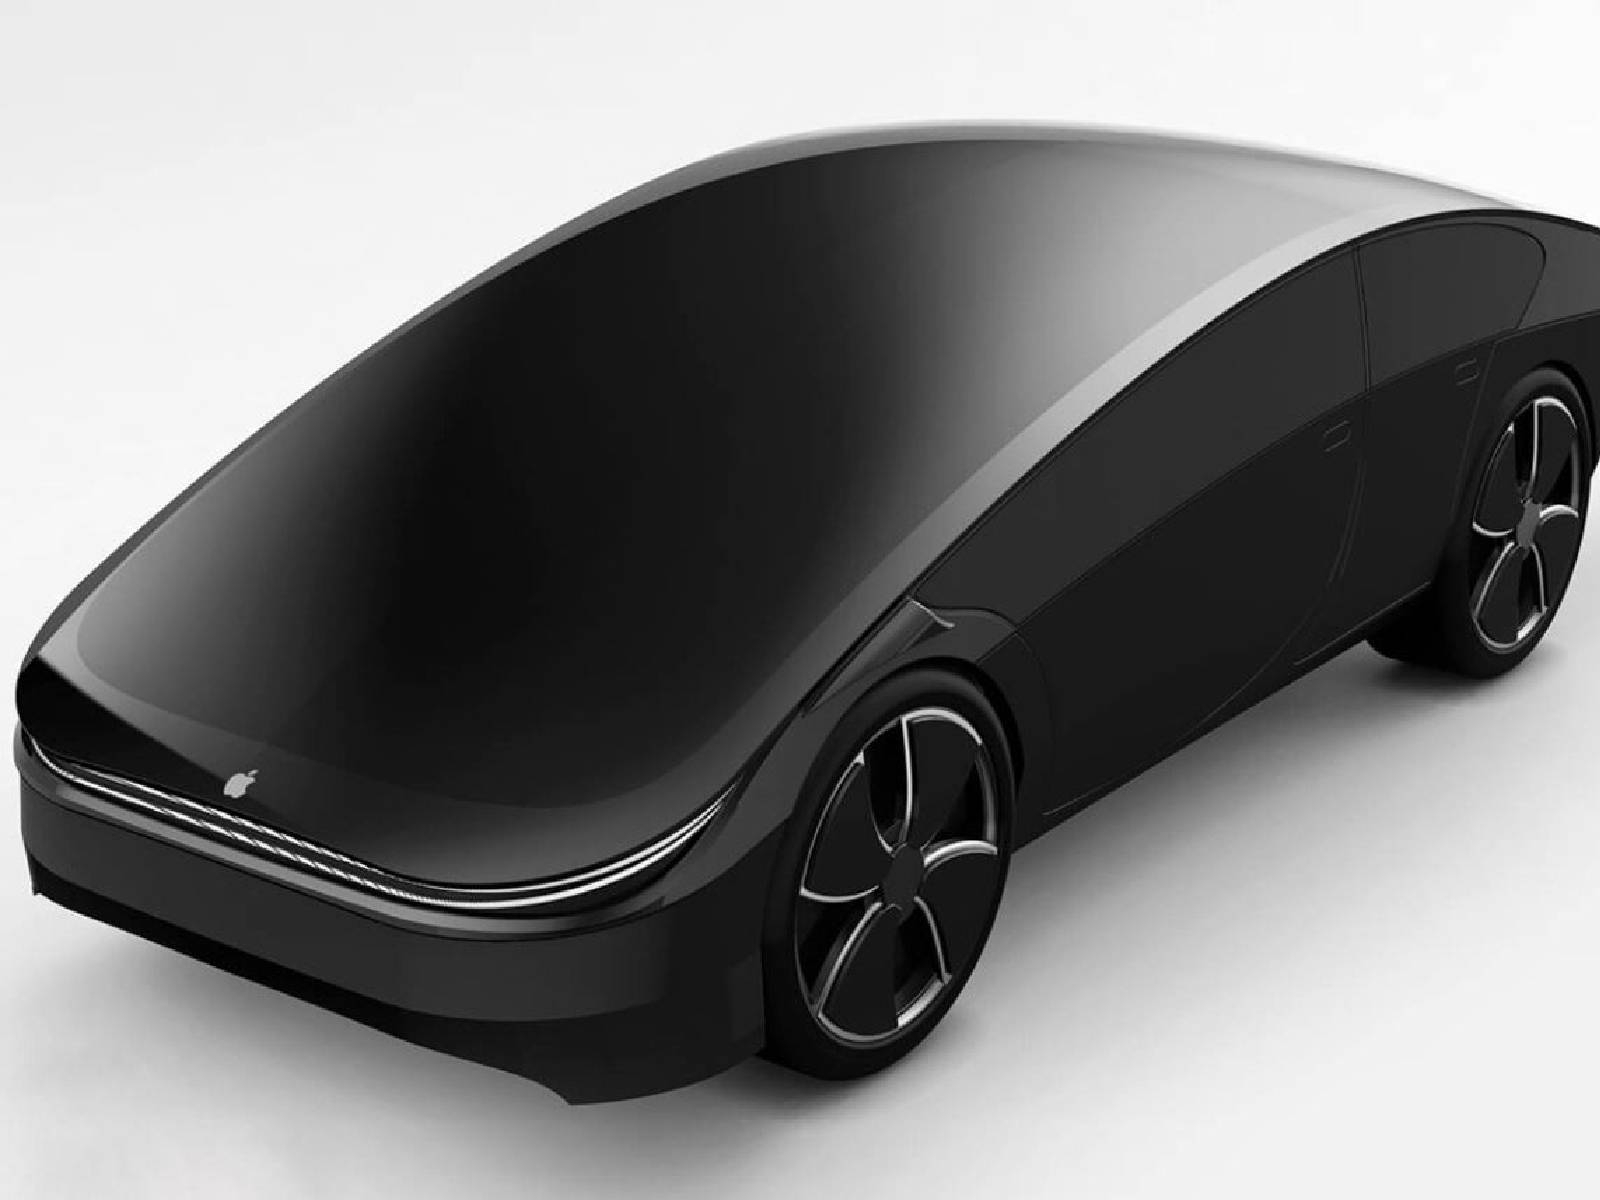 Apple Car 可能在今年年底發布？分析師認為還會跟保時捷 Taycan 一樣配備 Apple TV+！